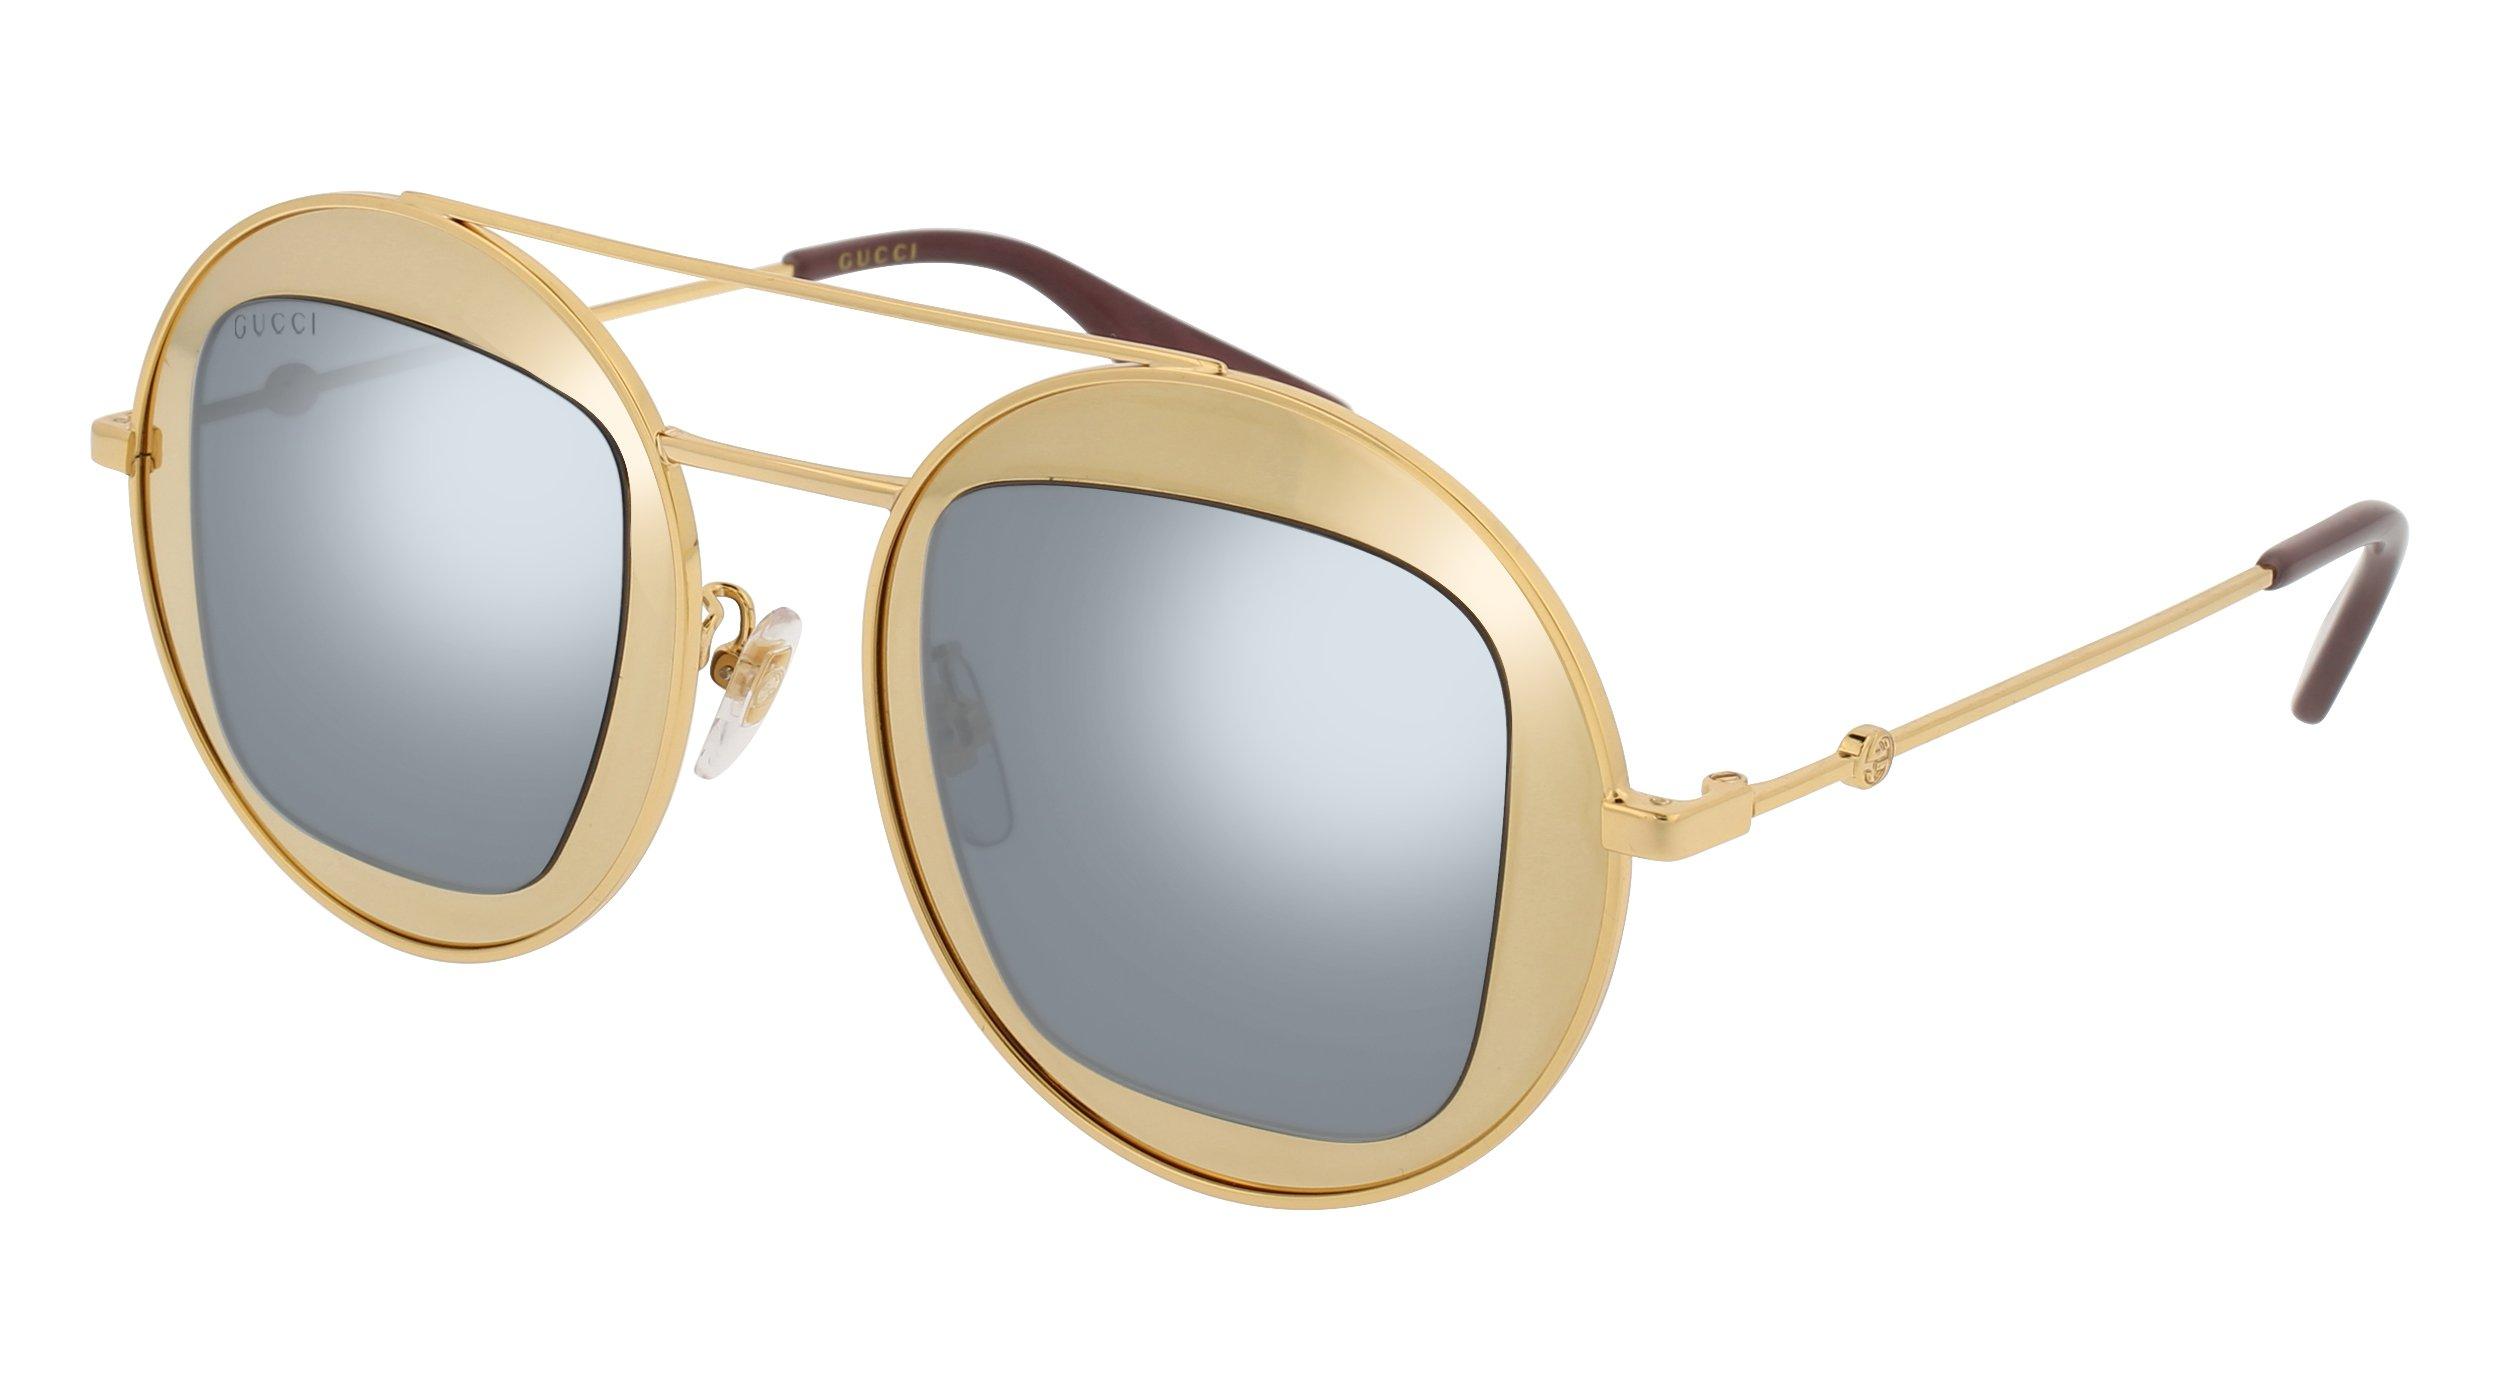 Gucci Oversized Round Mirrored Sunglasses in Metallic | Lyst